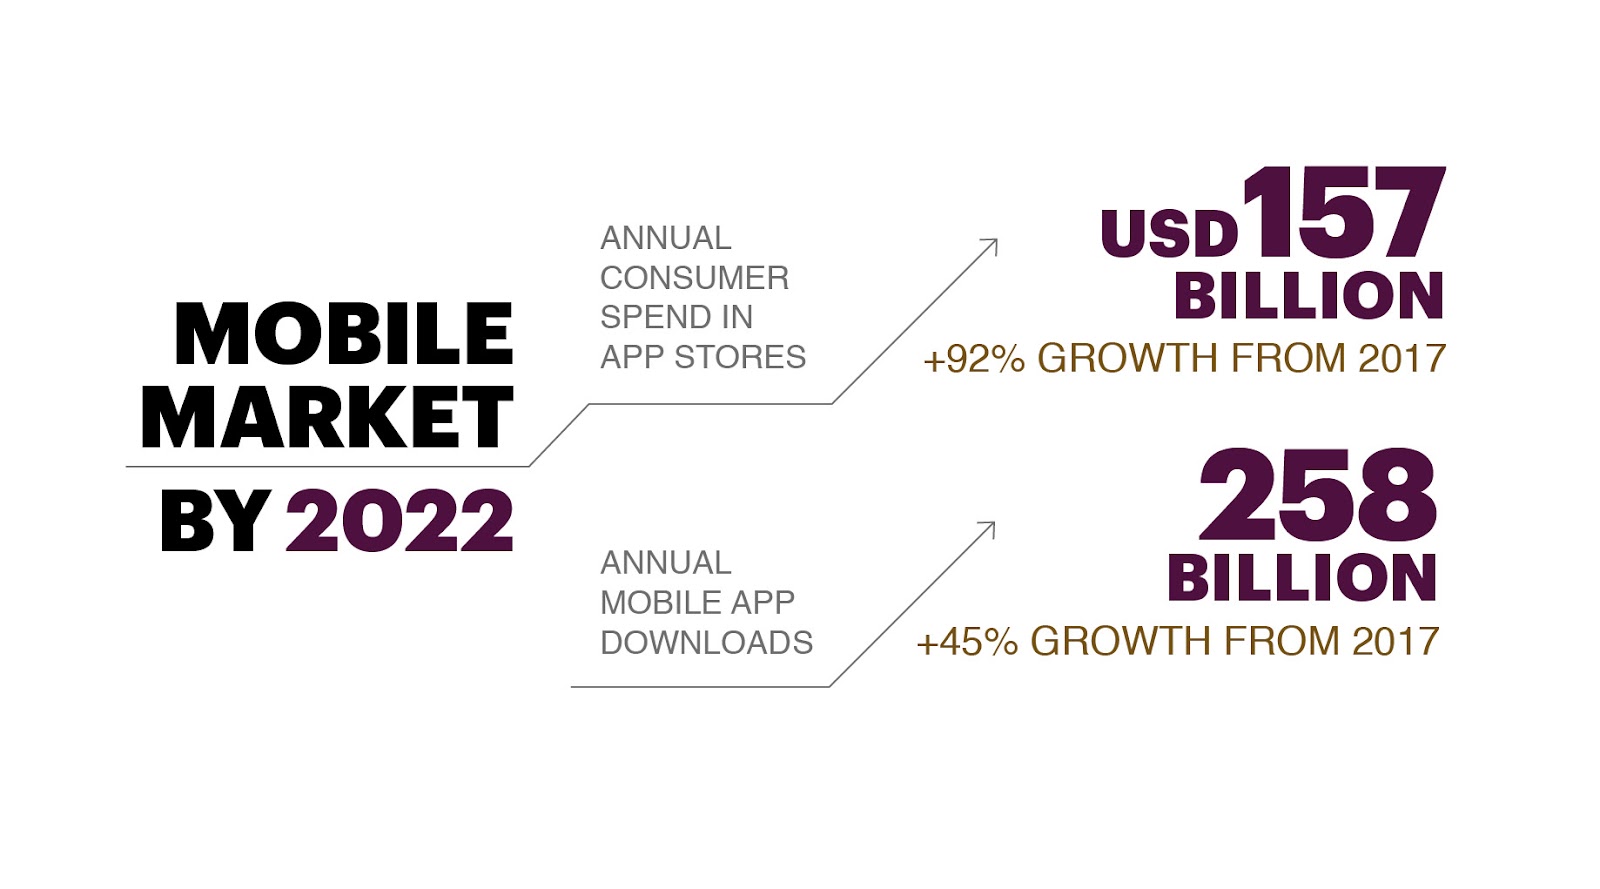 Mobile Market by 2022. USD 157 billion in Annual Consumer Spend and 258 billion annual mobile app downloads.